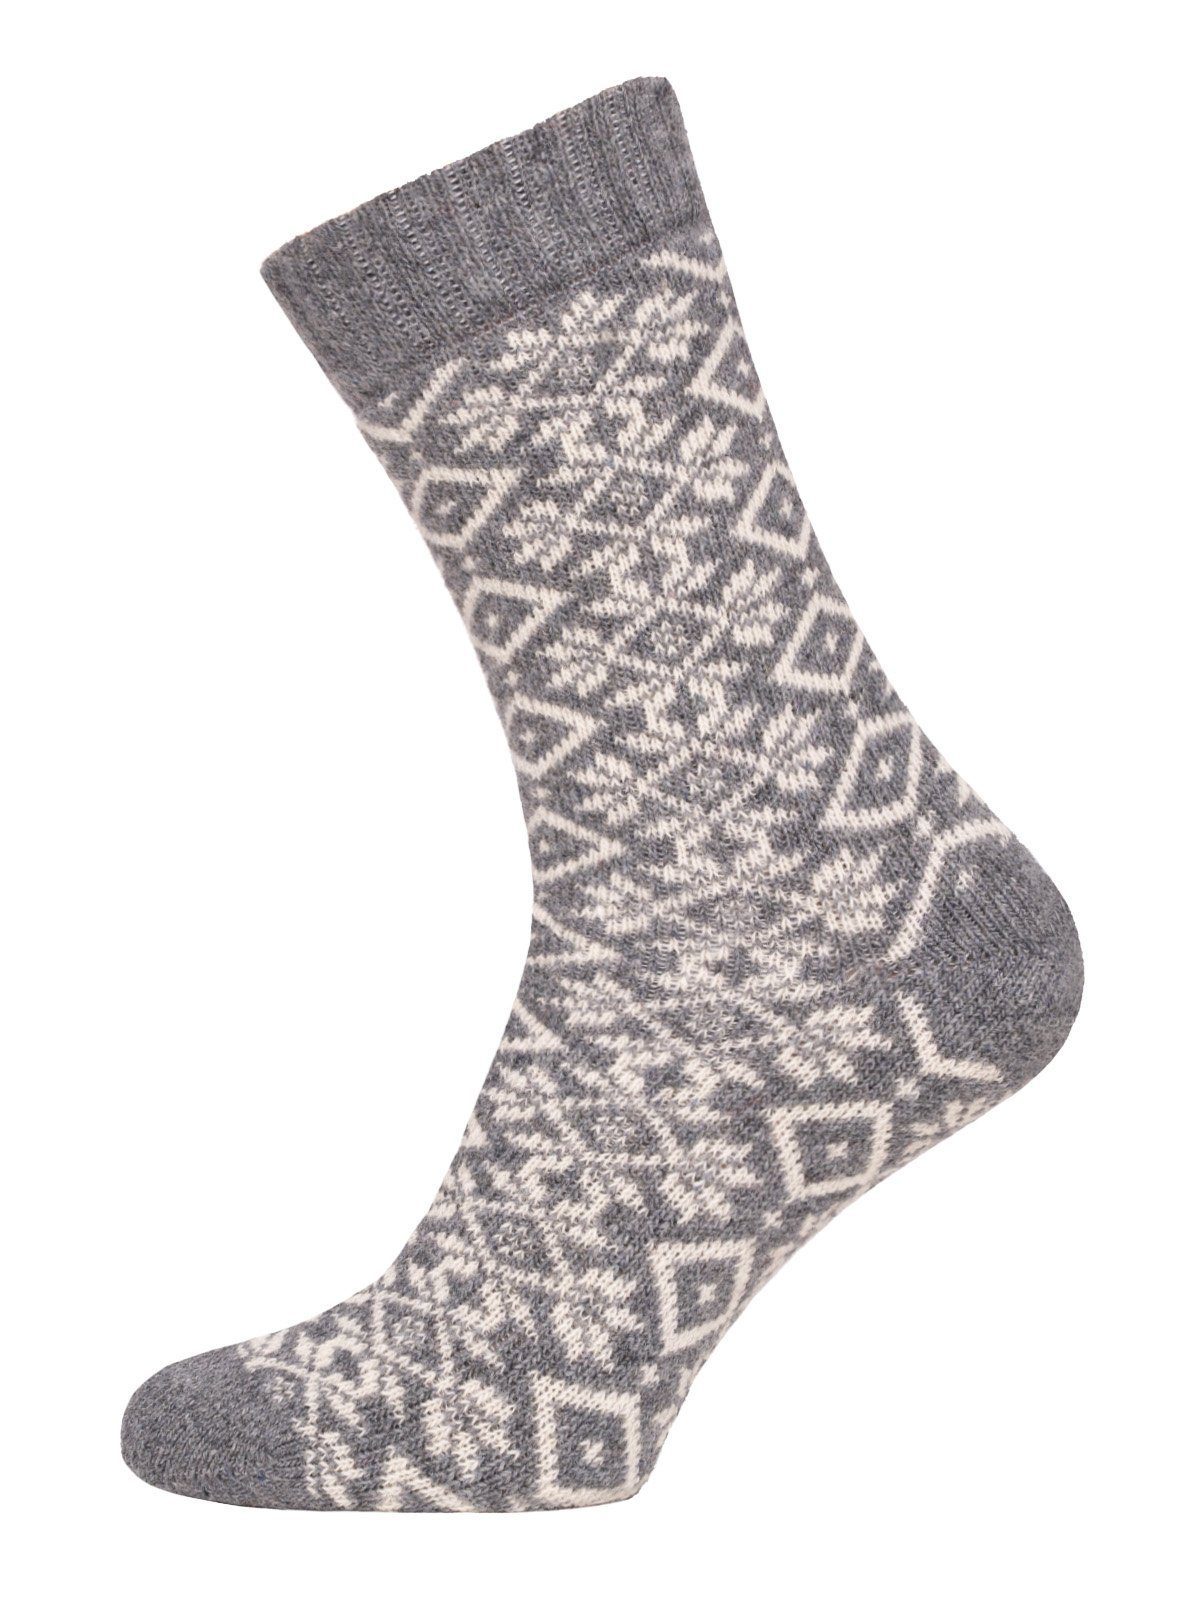 HomeOfSocks Socken Hygge Hyggelig Design mit Herren Für Damen Wollanteil Mit 45% Socken Grau Dicke Bunten Socken Wolle Hohem In & Warm Dick